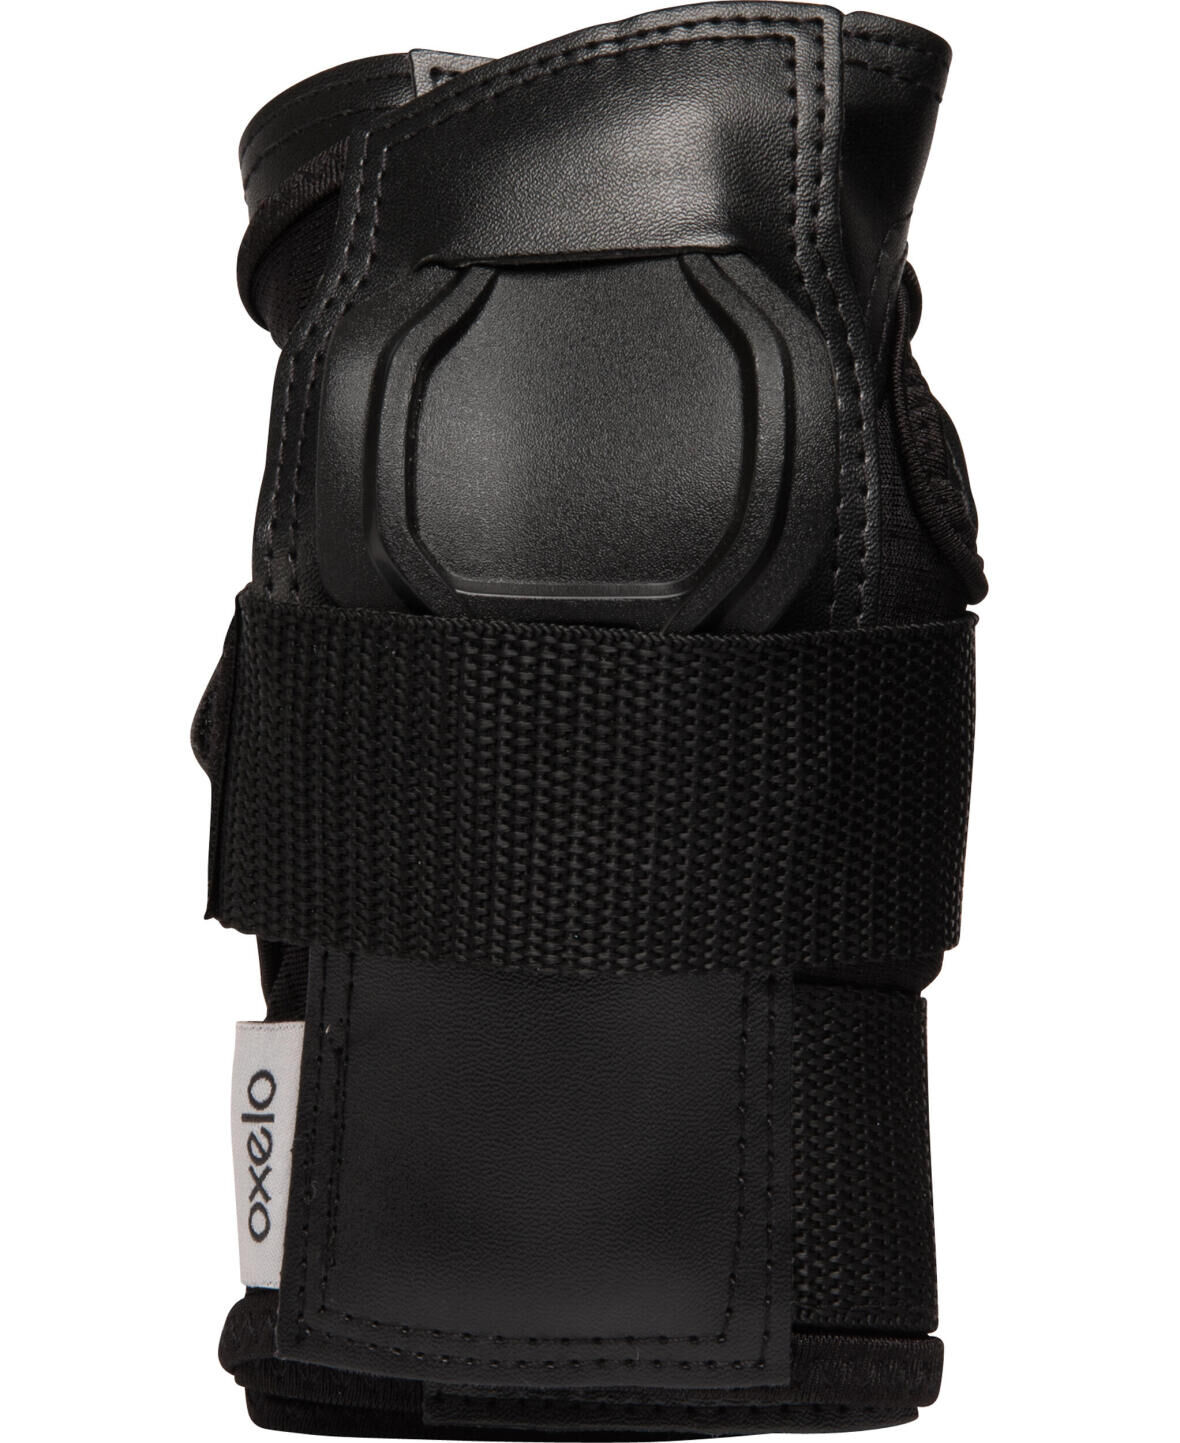 protège poignet wrist guard fit500 black rangebook[8495083]tci_pshot_001